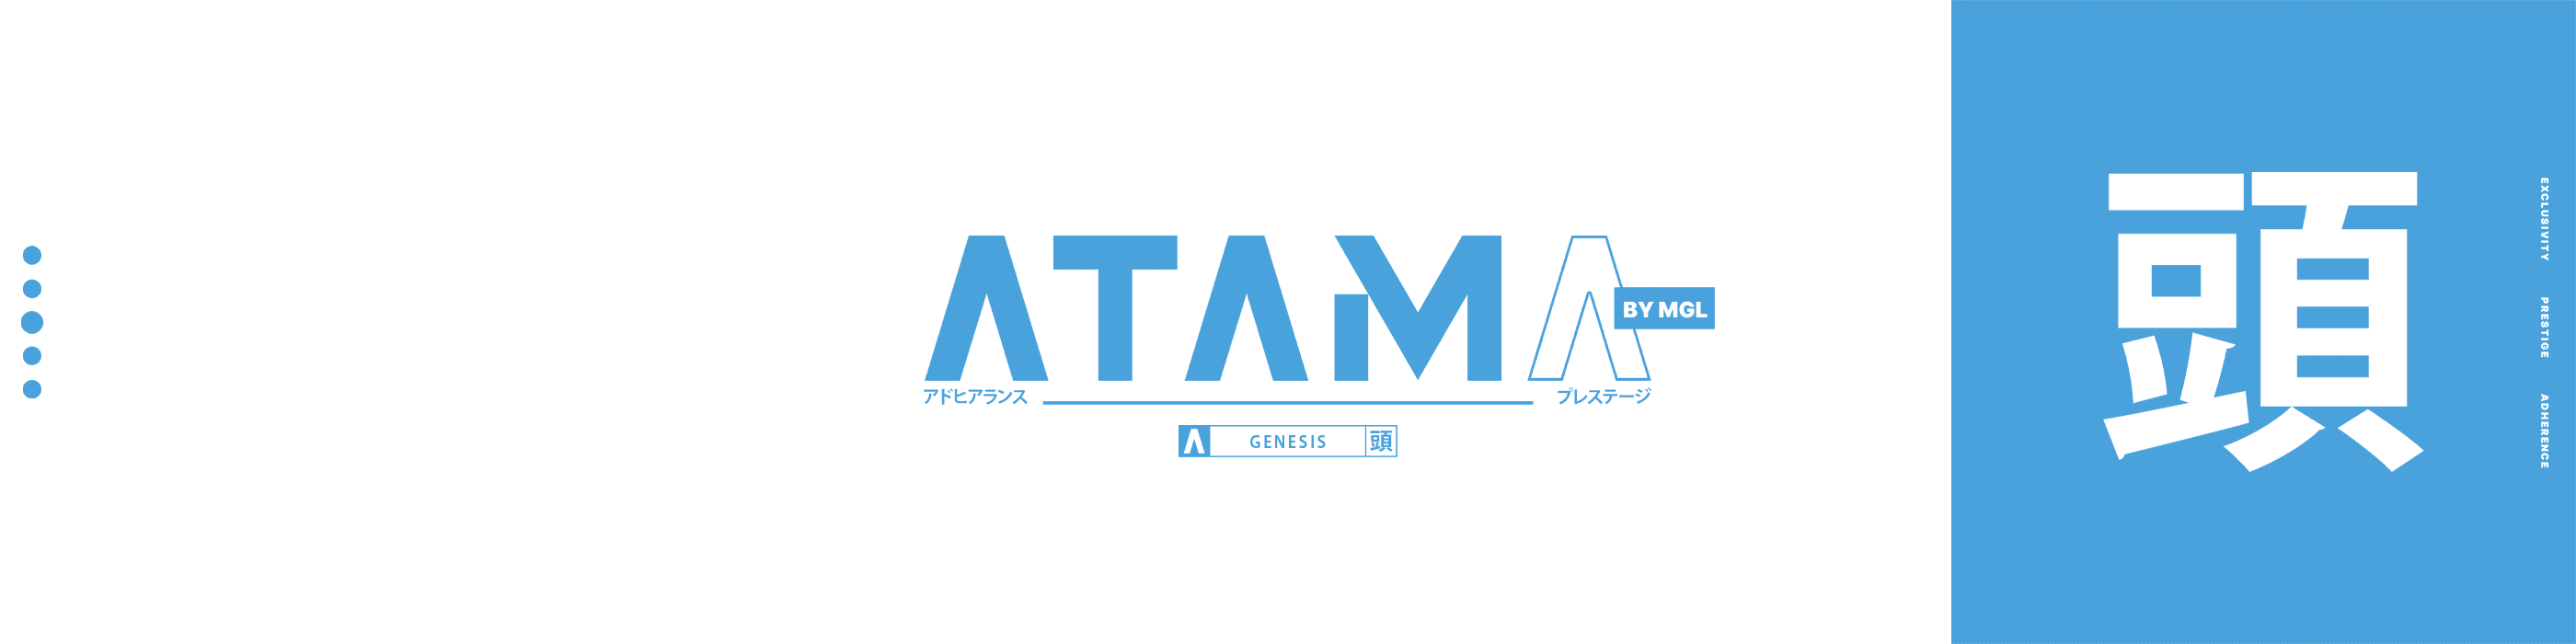 Atama-Deployer banner